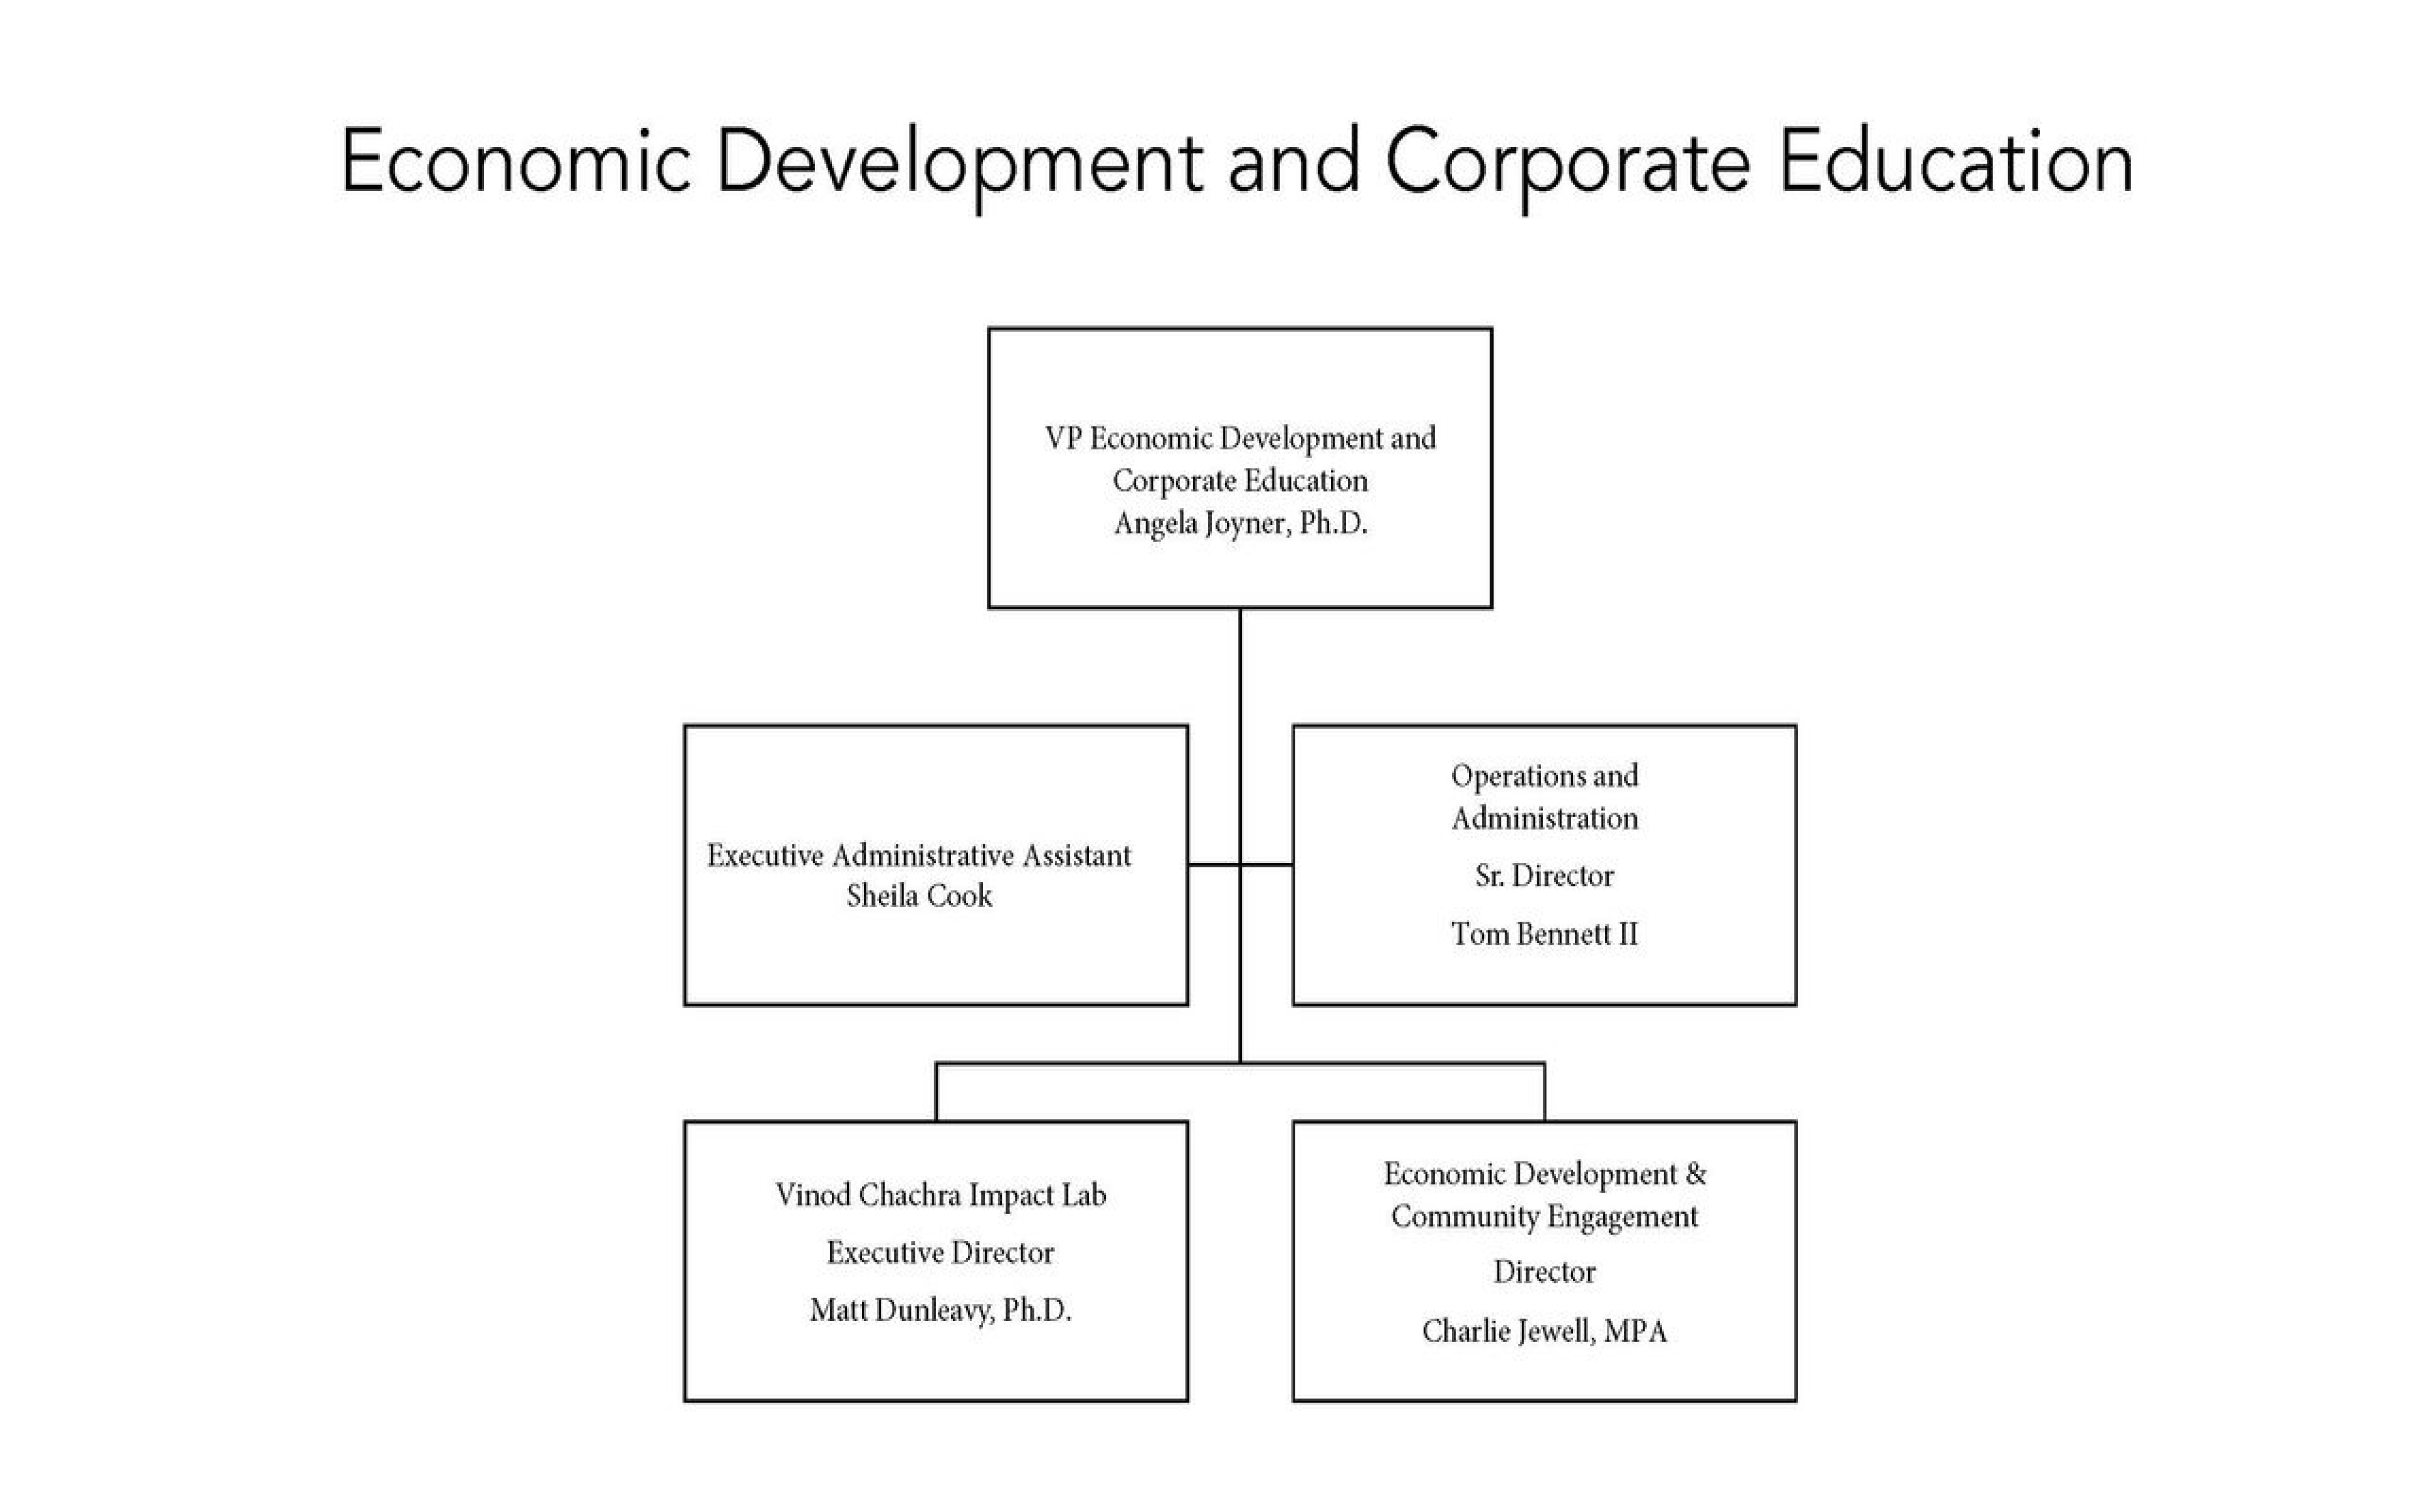 Image of the Economic Development and Corporate Education organization chart